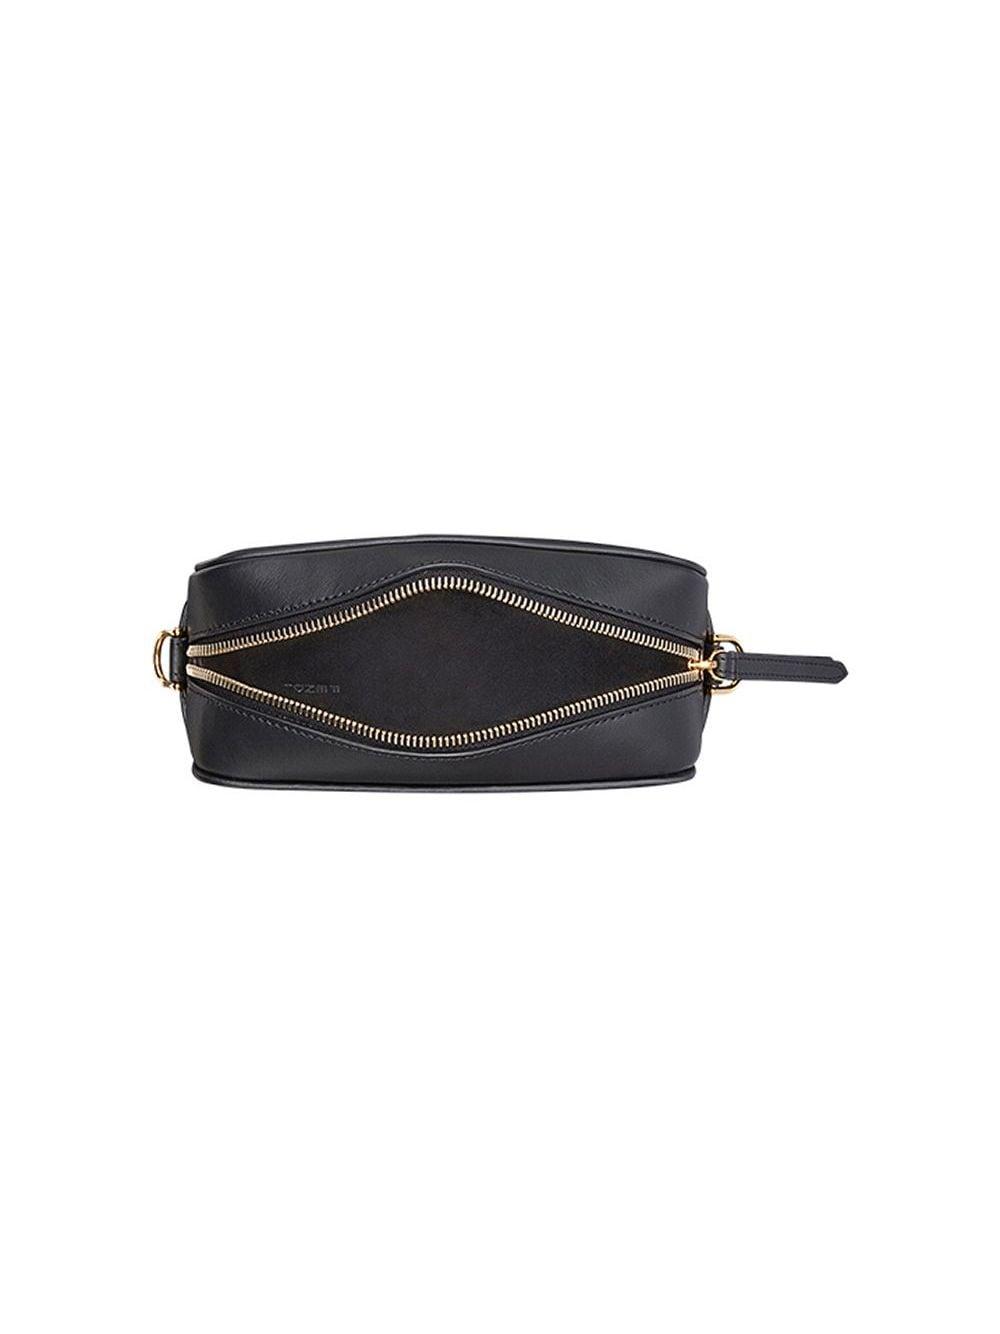 Fendi Leather Mini Camera Case Crossbody Bag in Black - Lyst